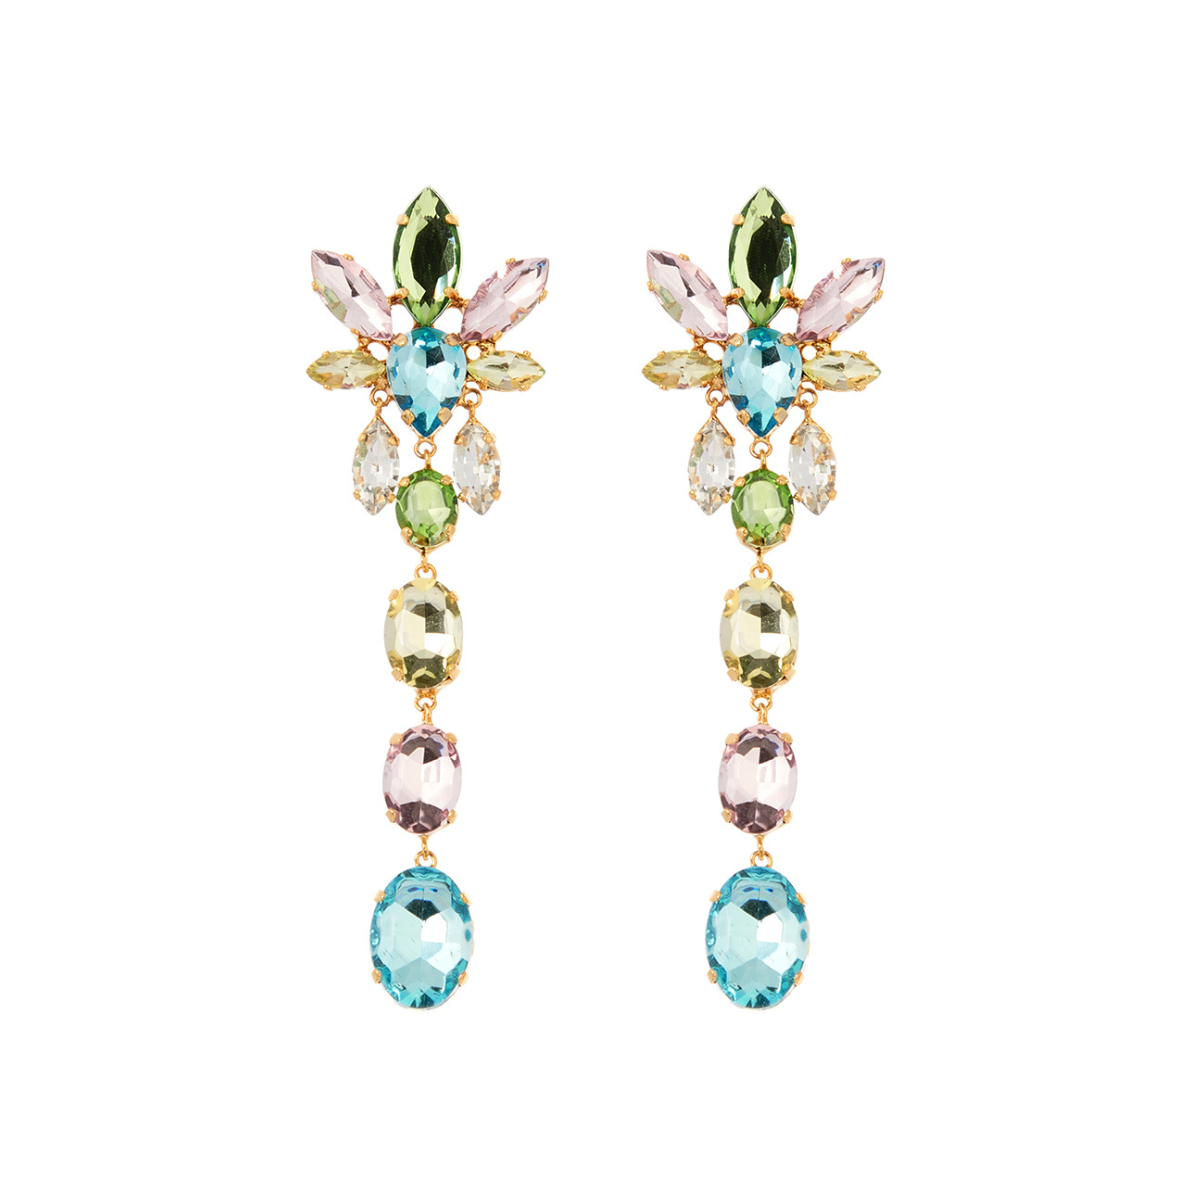 Marchese Crystal Earrings